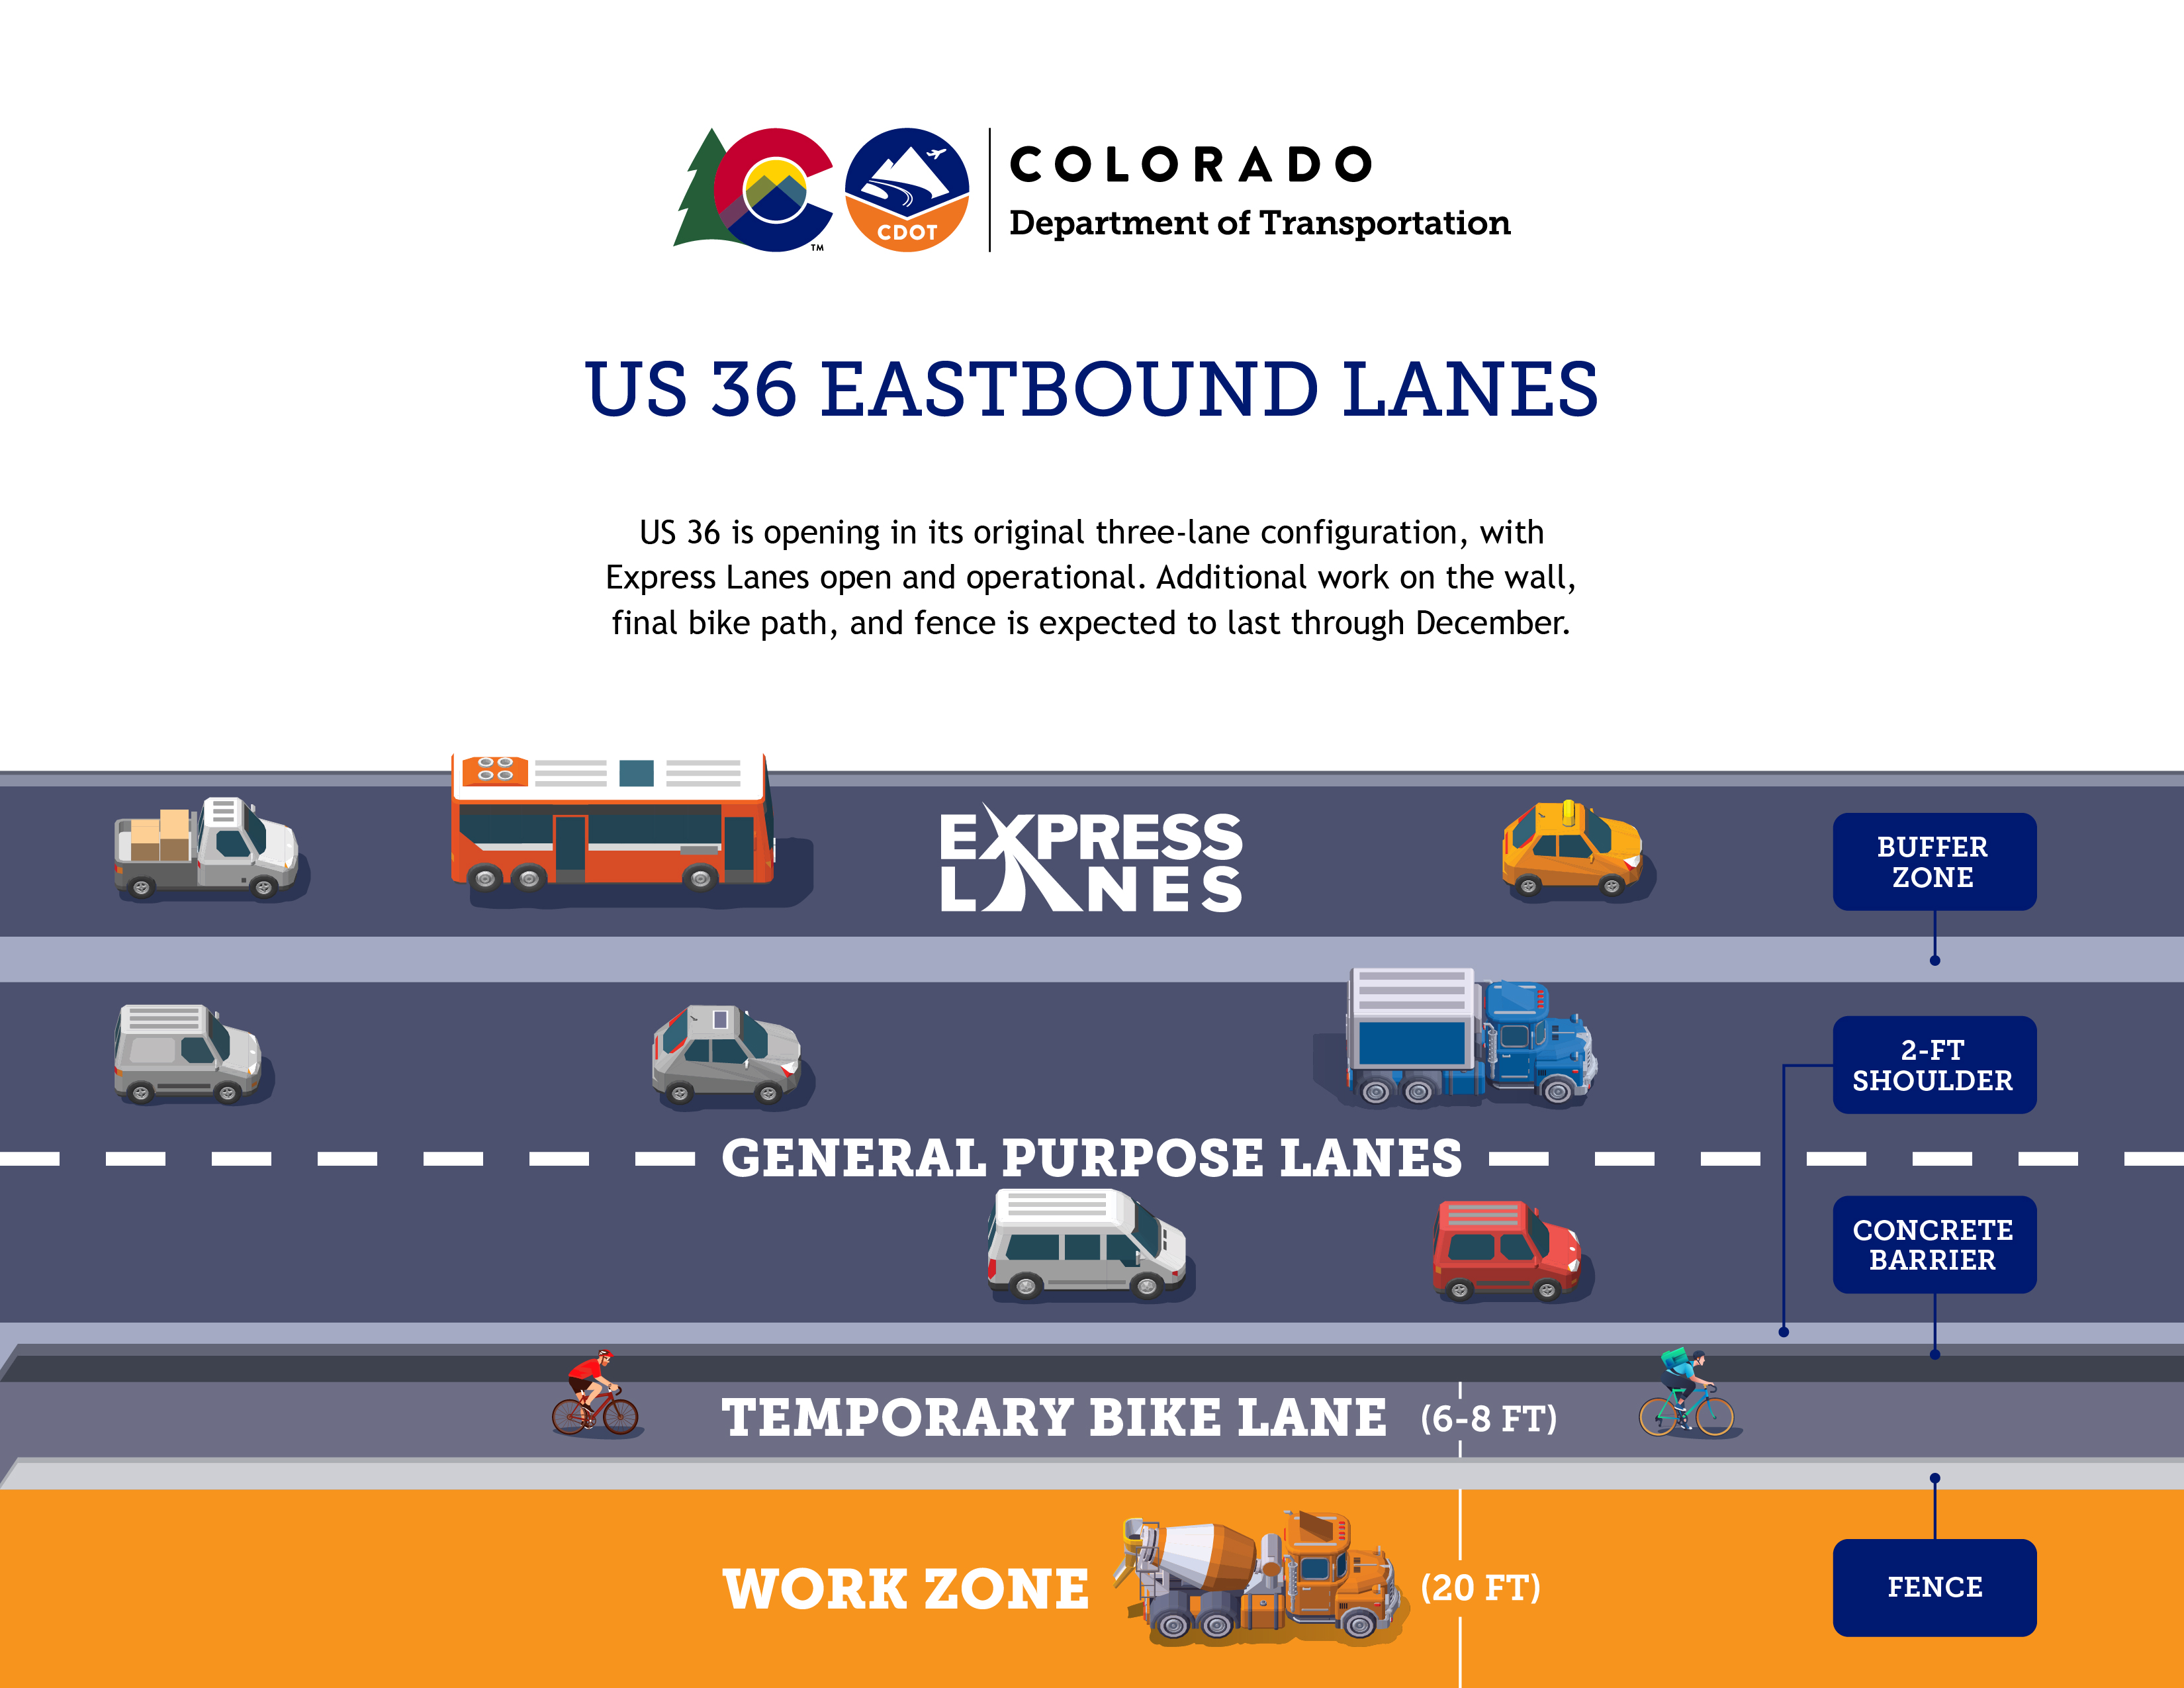 US 36 Eastbound Lane Graphic detail image